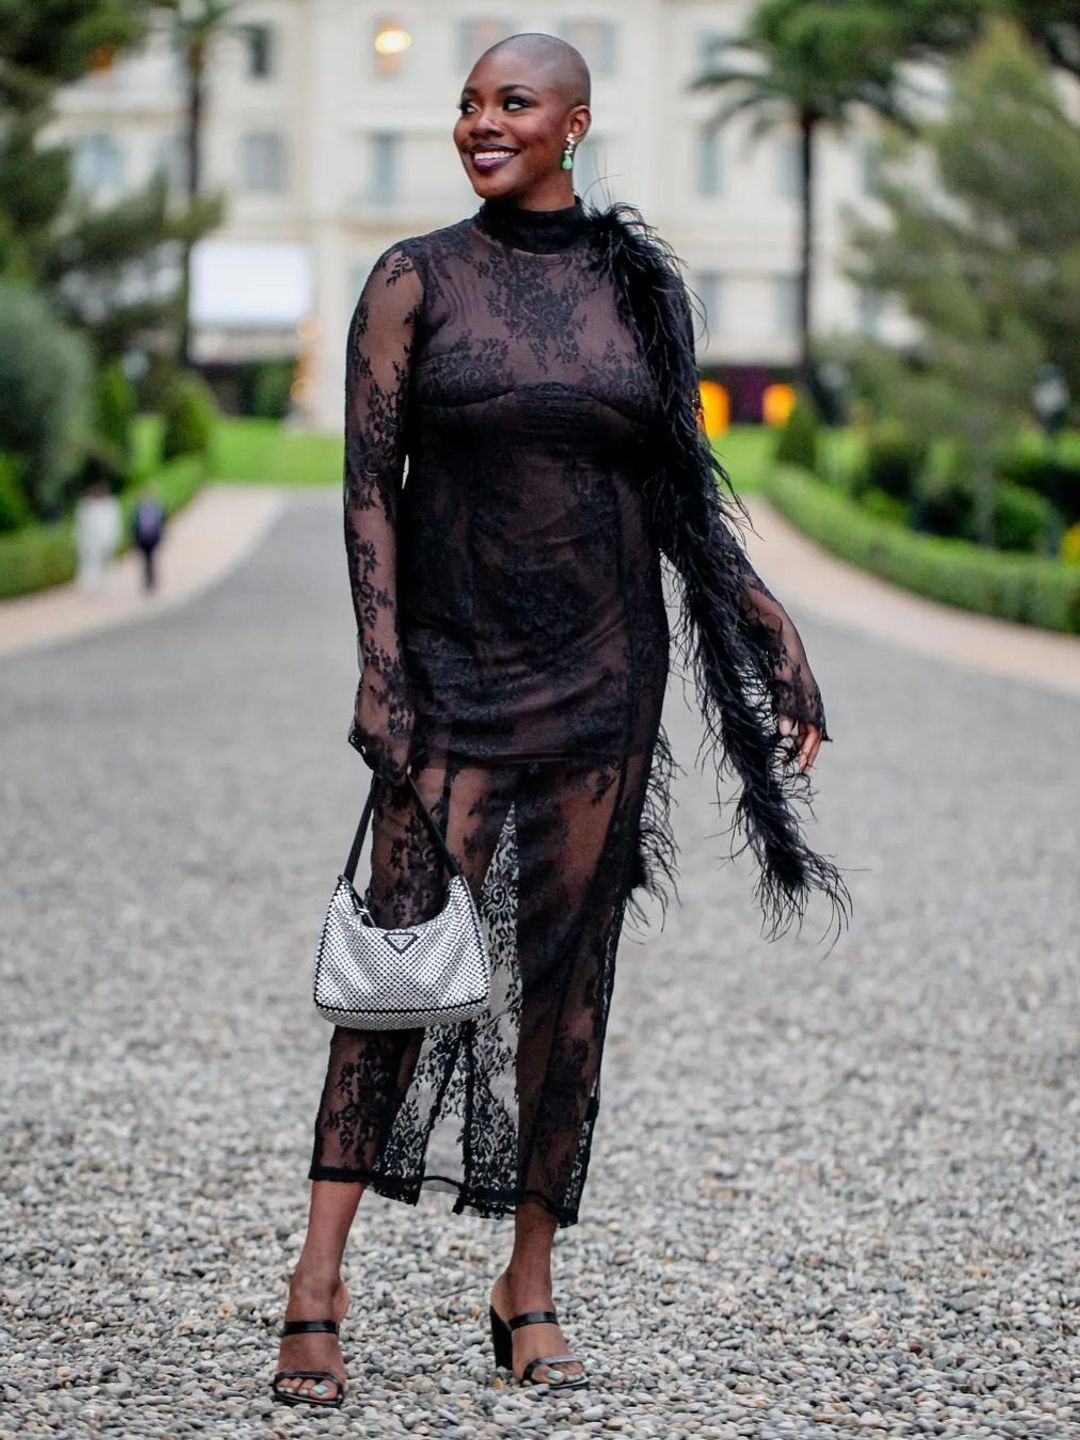 Yomi wears a black lace dress and a Prada bag